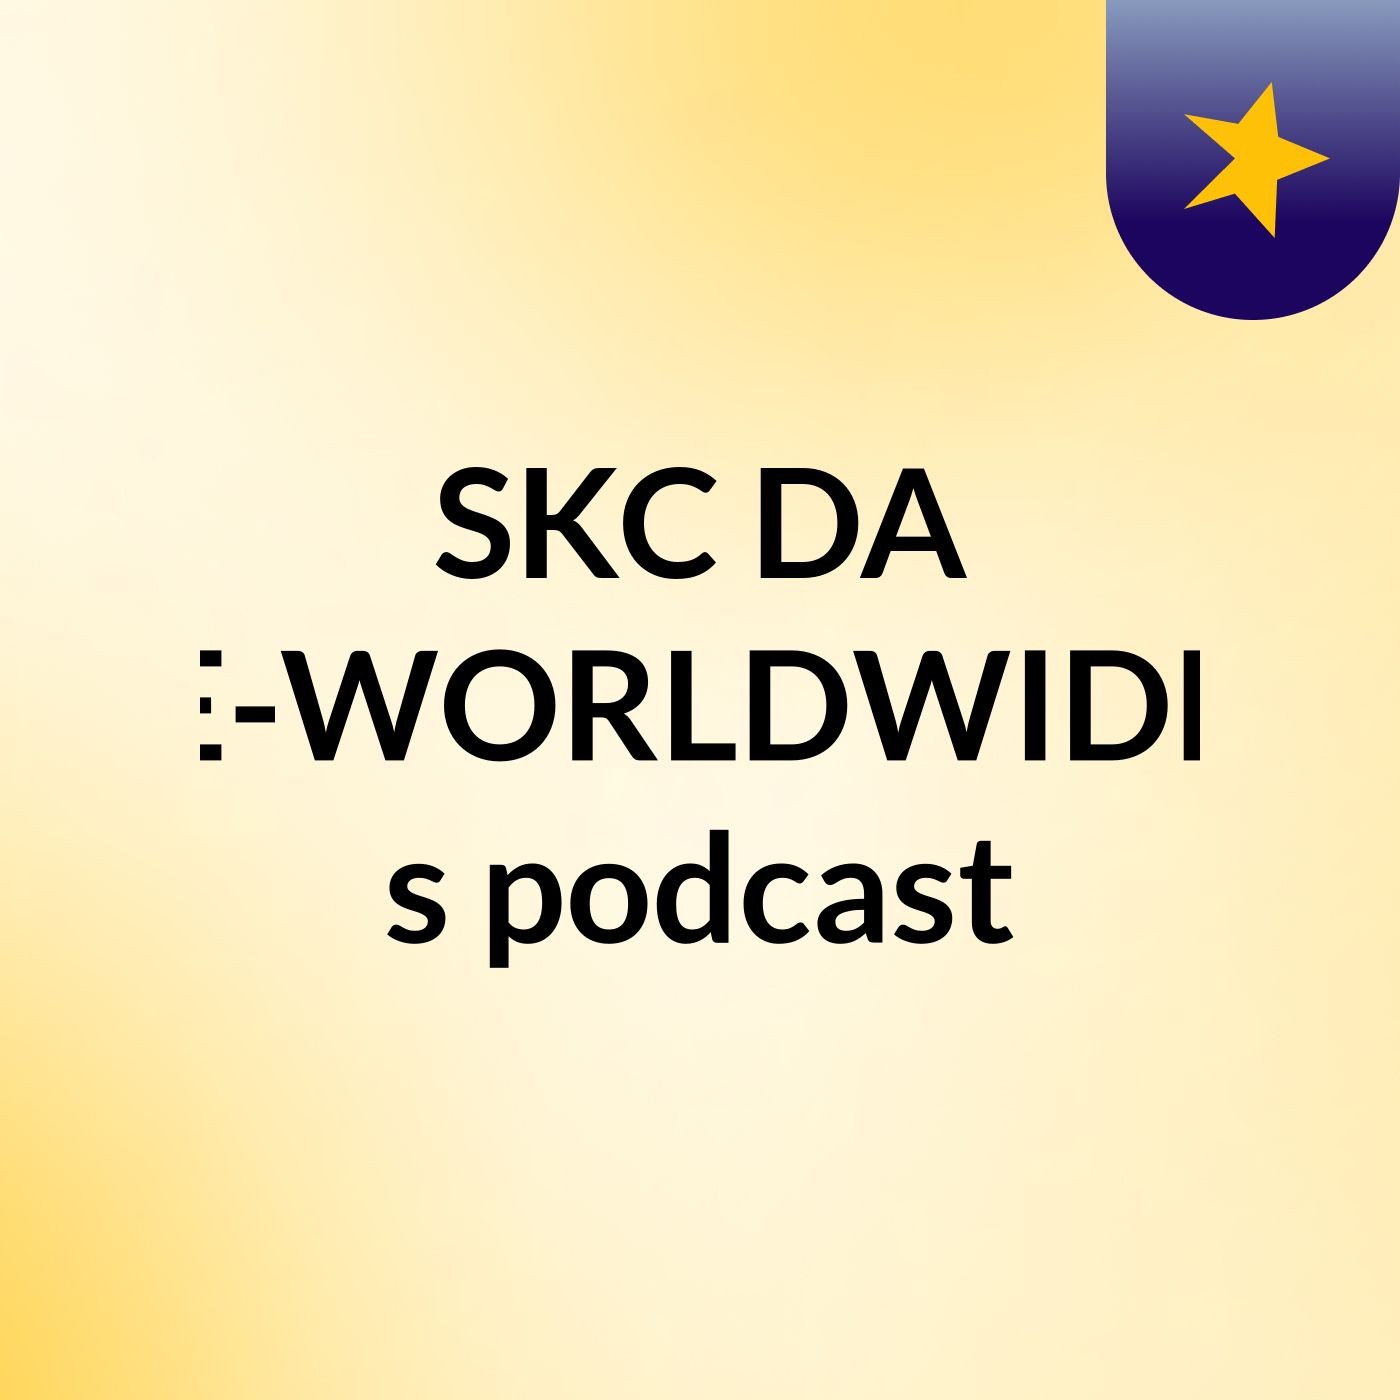 Episode 2 - SKC DA E-WORLDWIDE's podcast